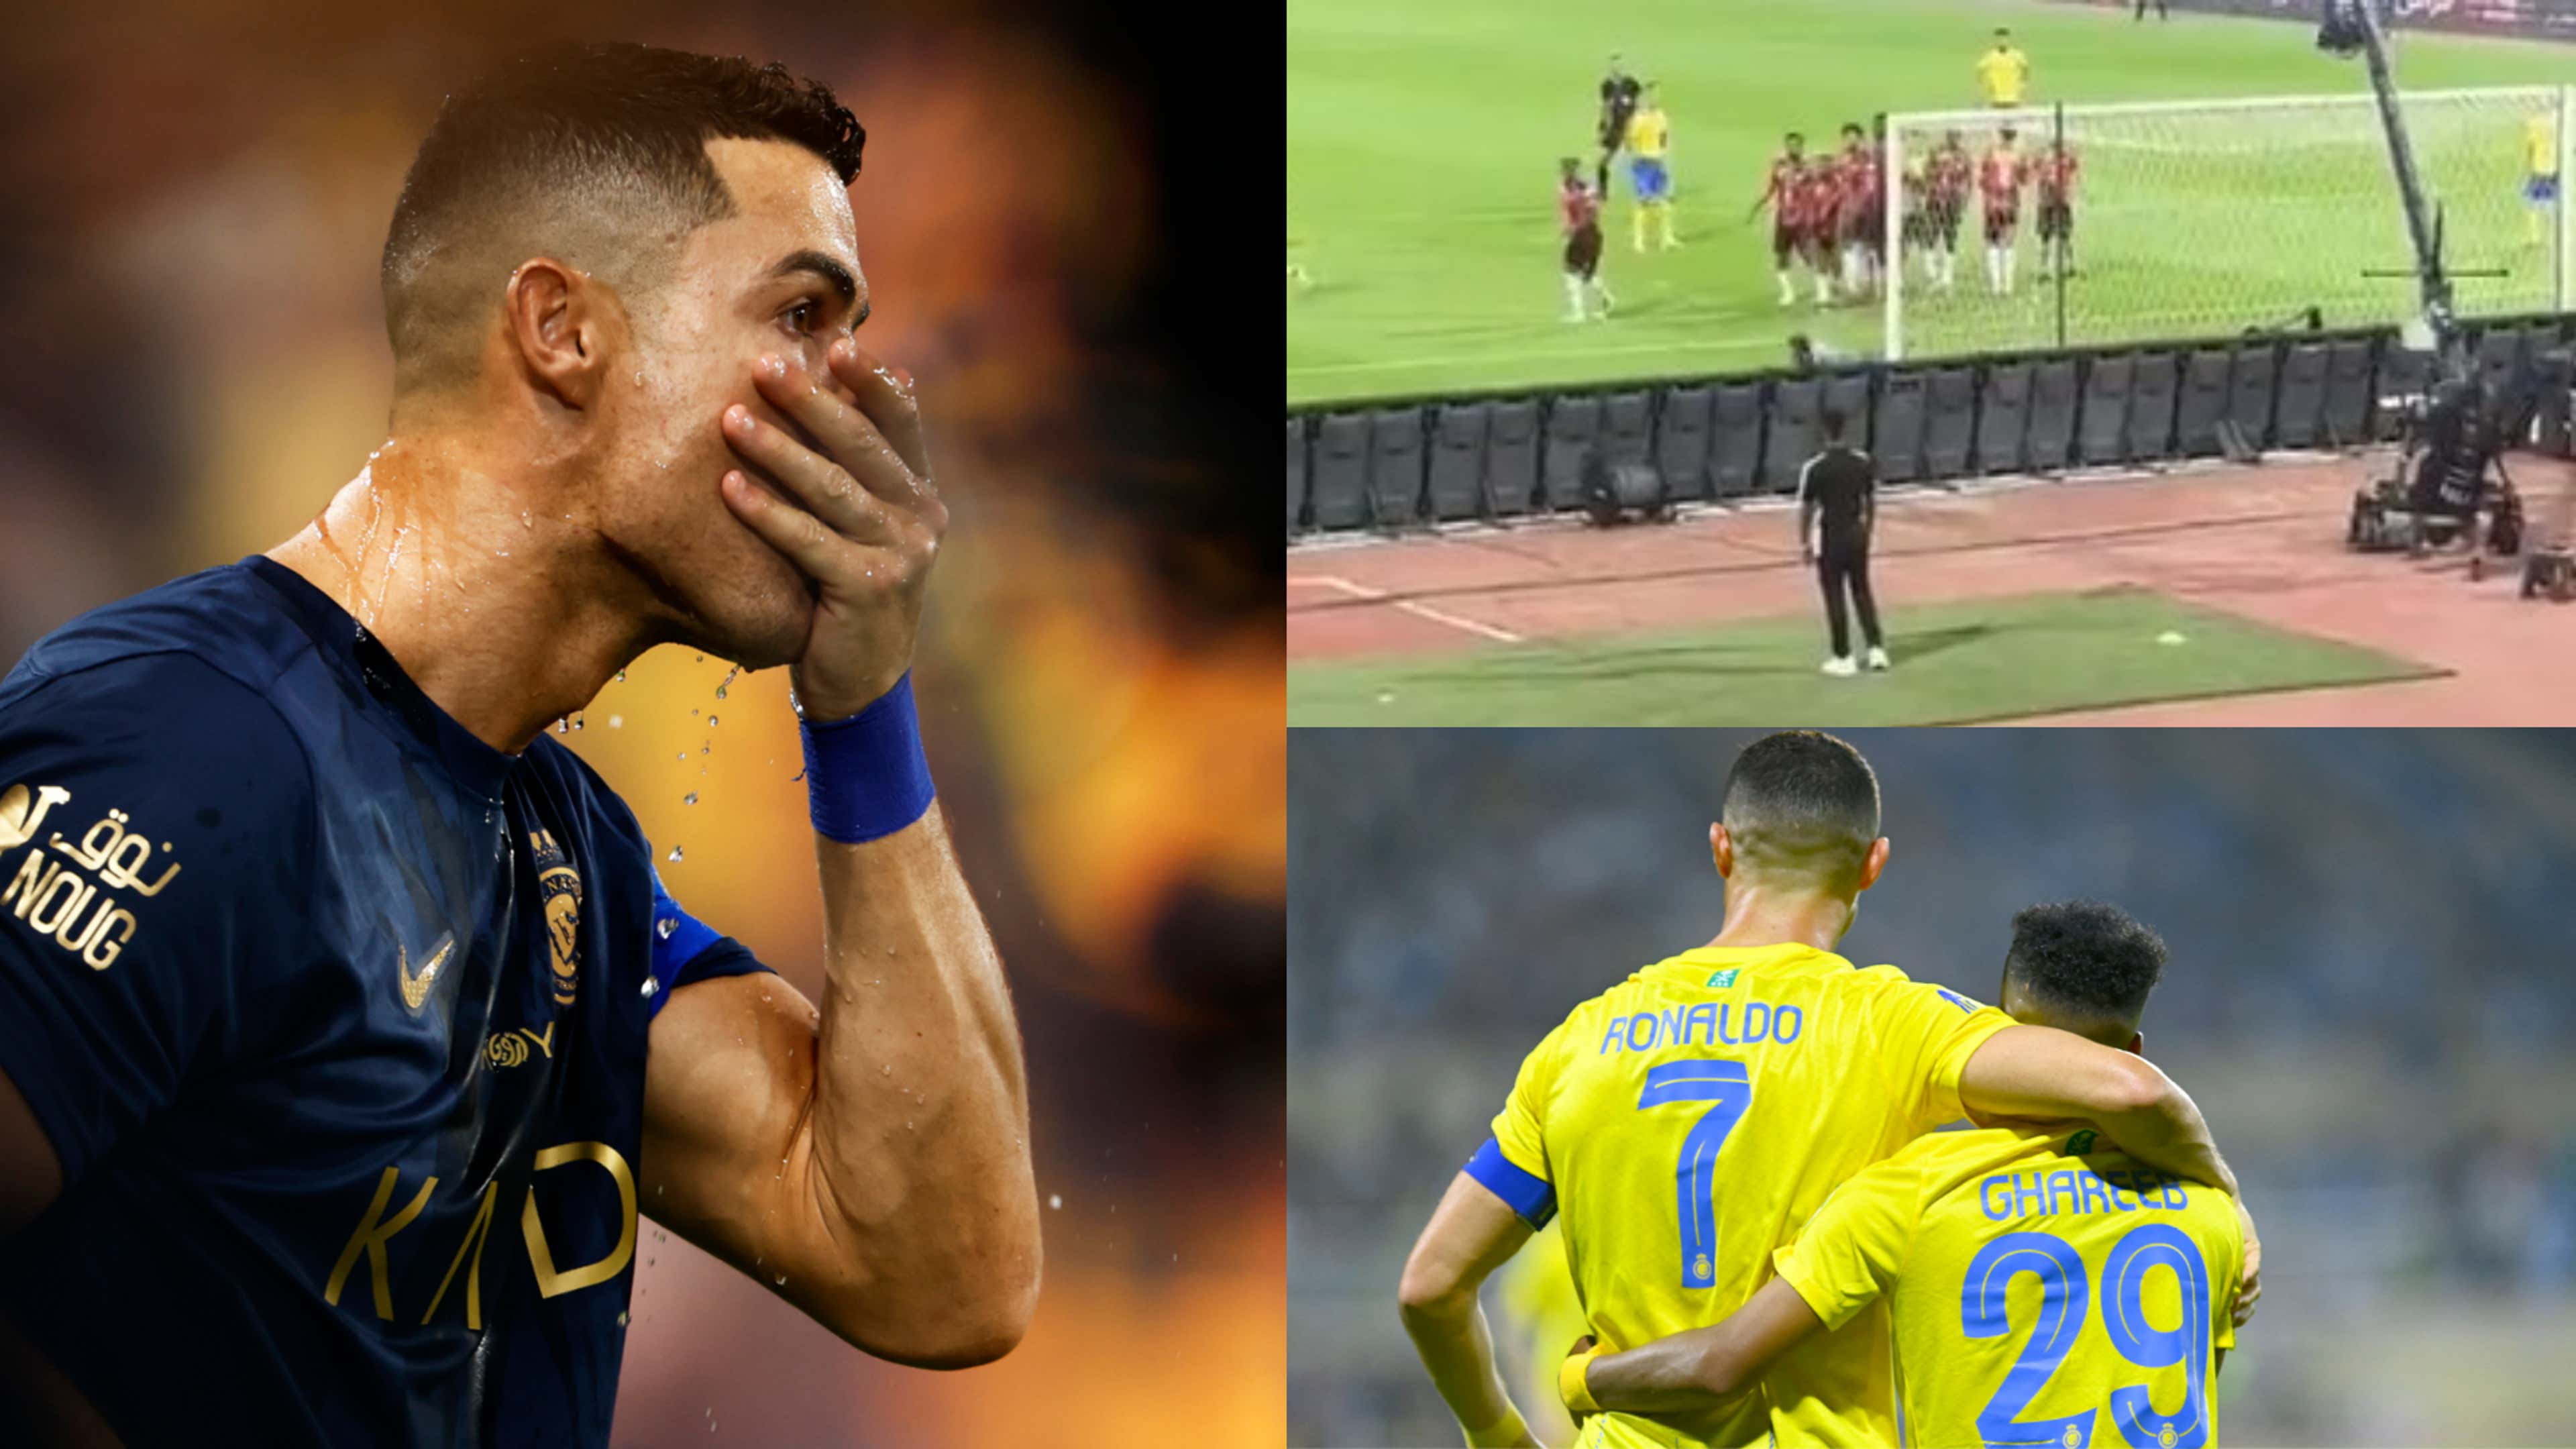 Cristiano Ronaldo en Instagram: The Cameraman got smacked by Ronaldo's  free-kick 😭😭